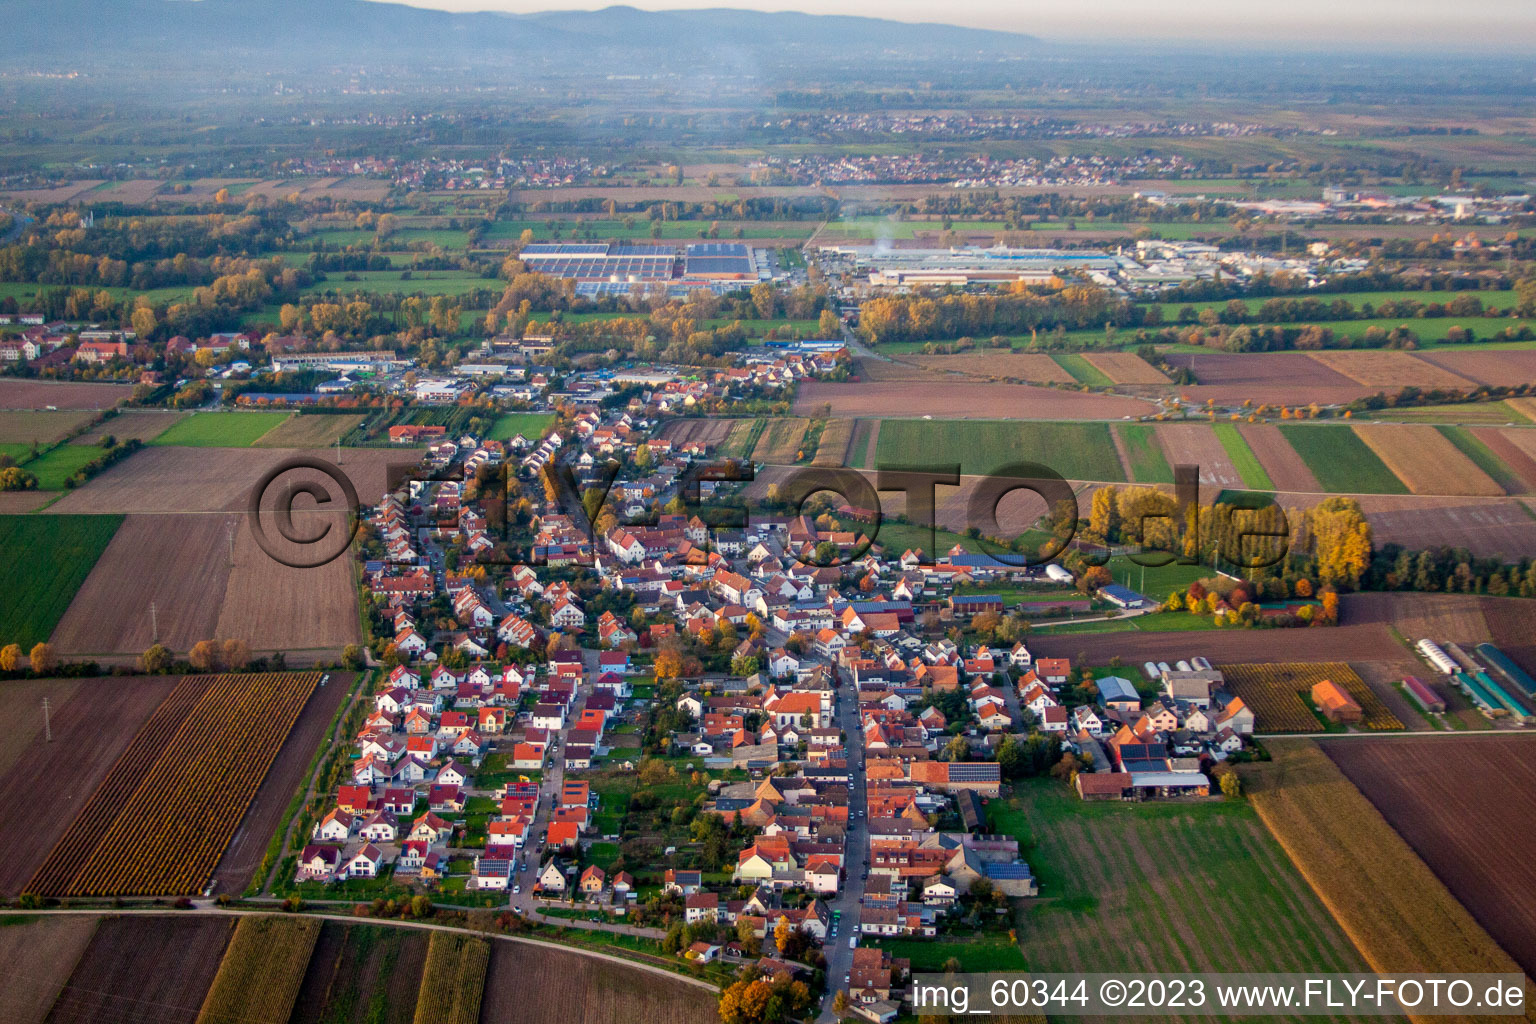 District Mörlheim in Landau in der Pfalz in the state Rhineland-Palatinate, Germany from above